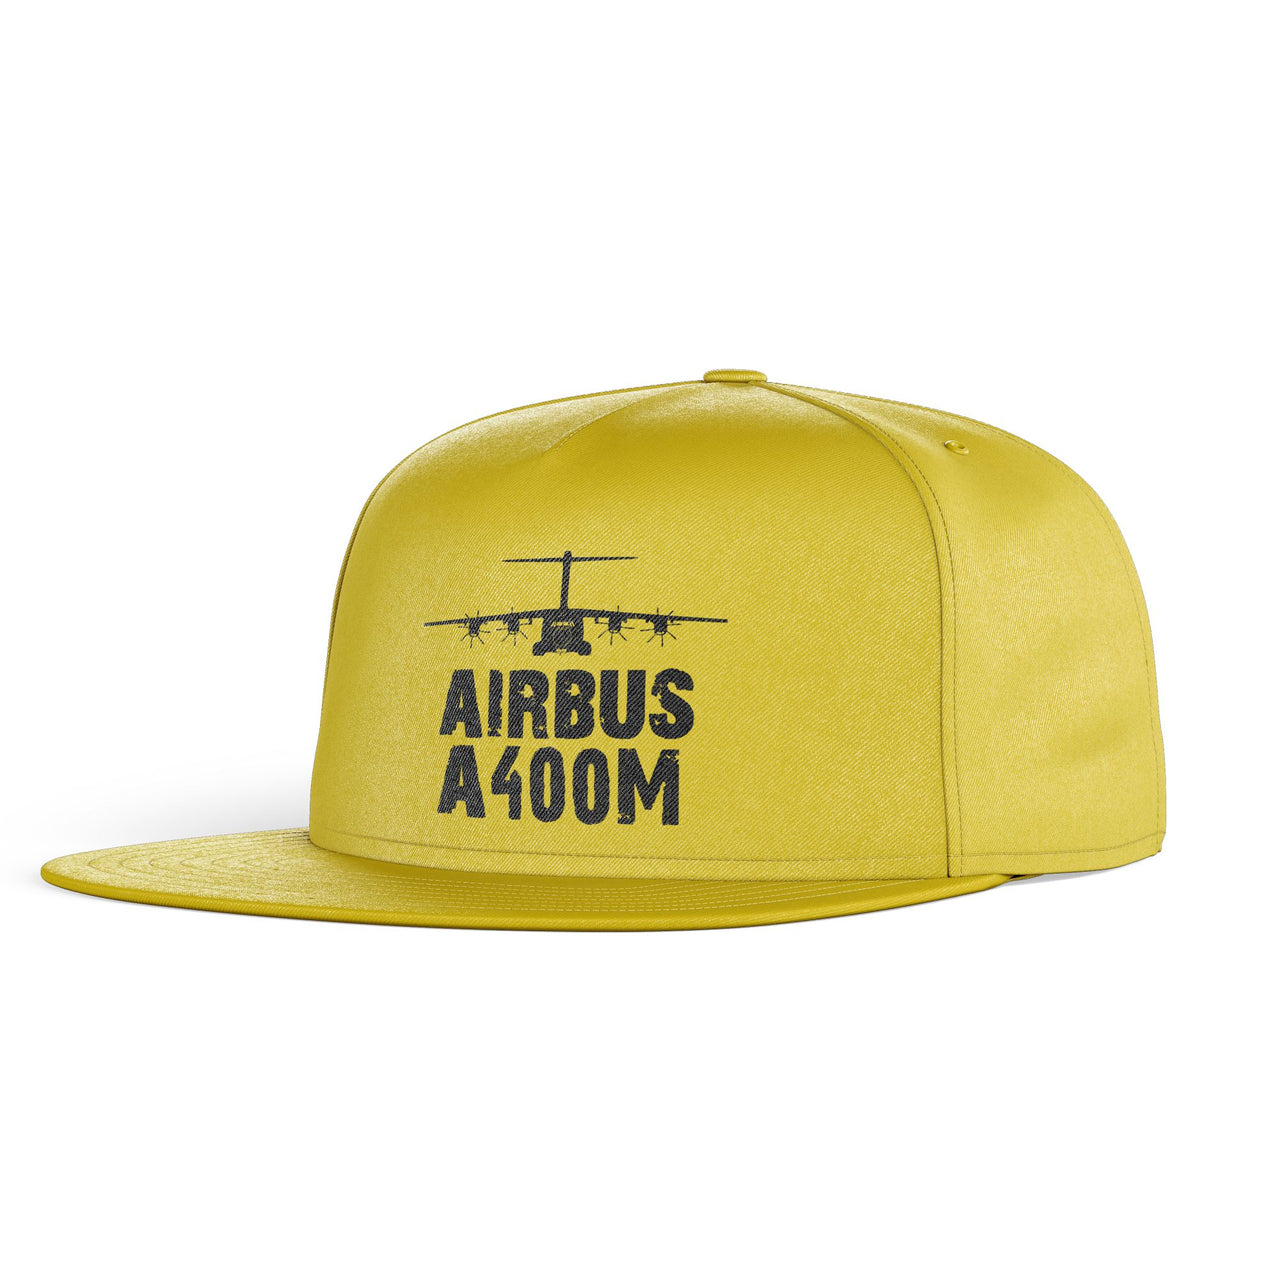 Airbus A400M & Plane Designed Snapback Caps & Hats